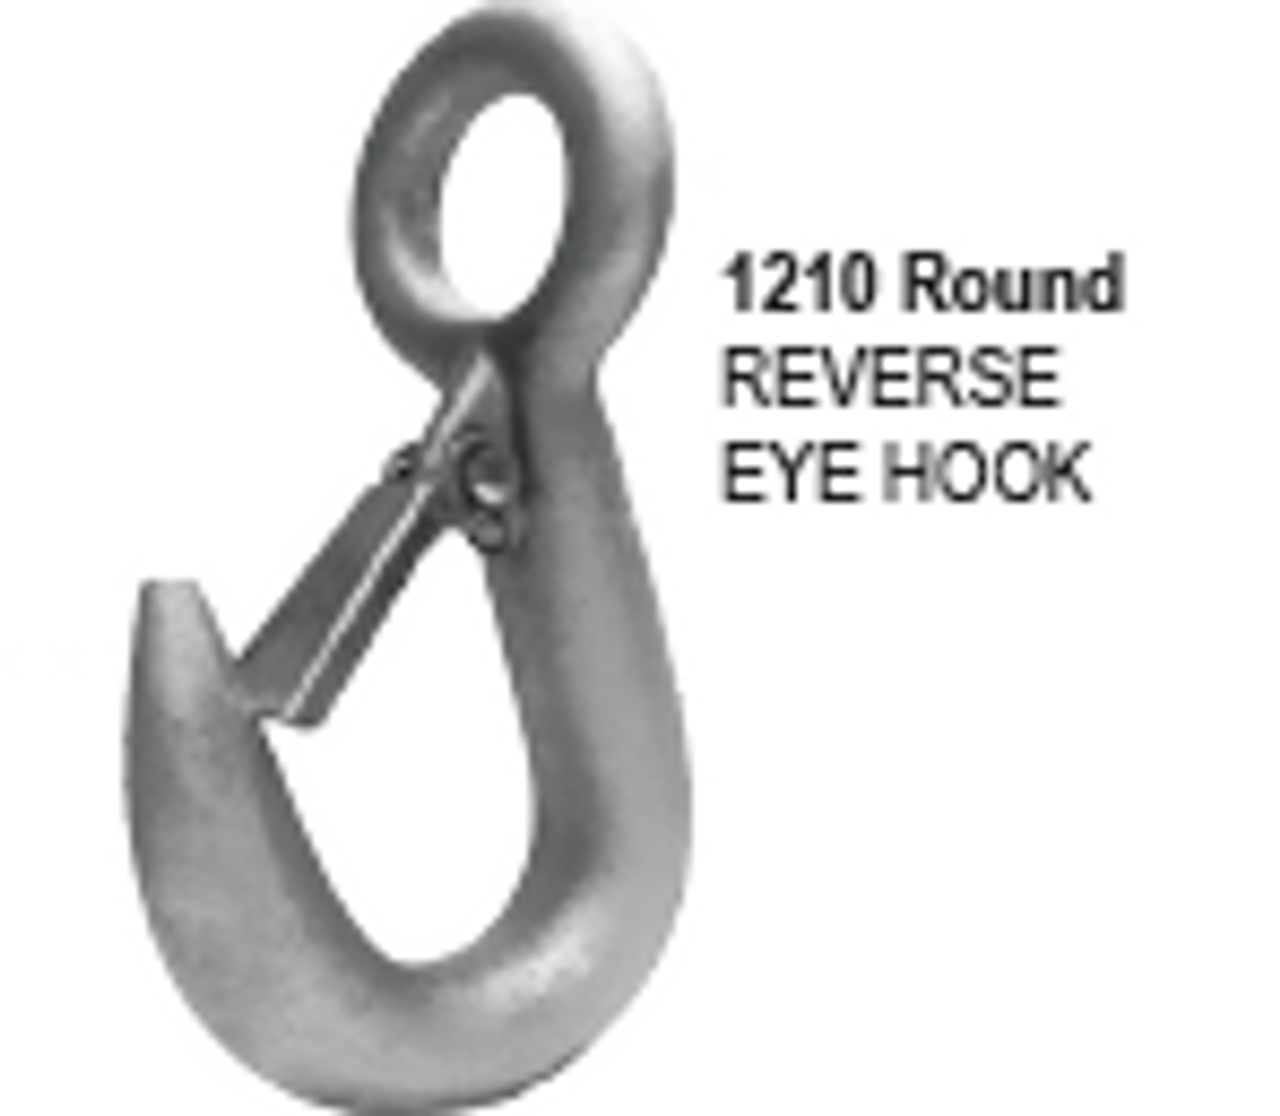 1210 Round Reverse Eye Hook Crosby